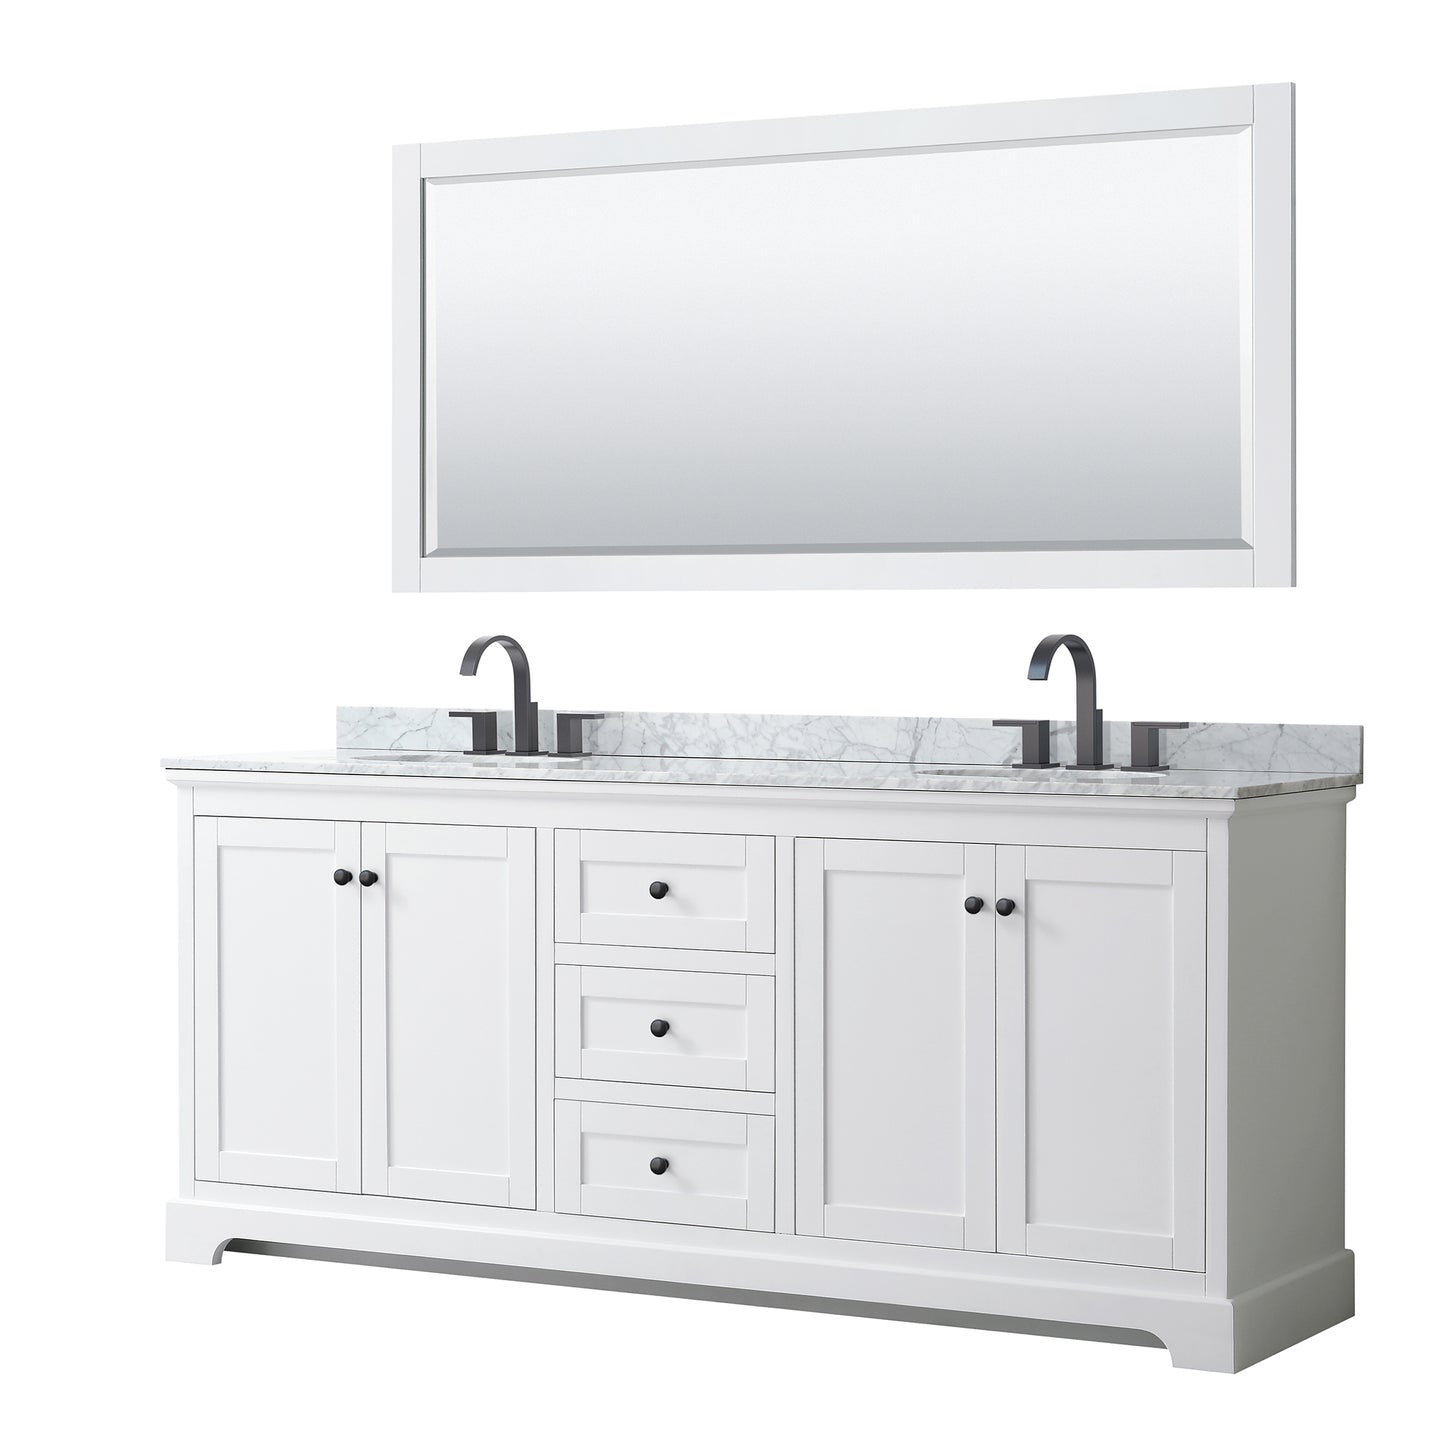 Wyndham Avery 80 Inch Double Bathroom Vanity White Carrara Marble Countertop, Undermount Oval Sinks in Matte Black Trim with 70 Inch Mirror - Luxe Bathroom Vanities